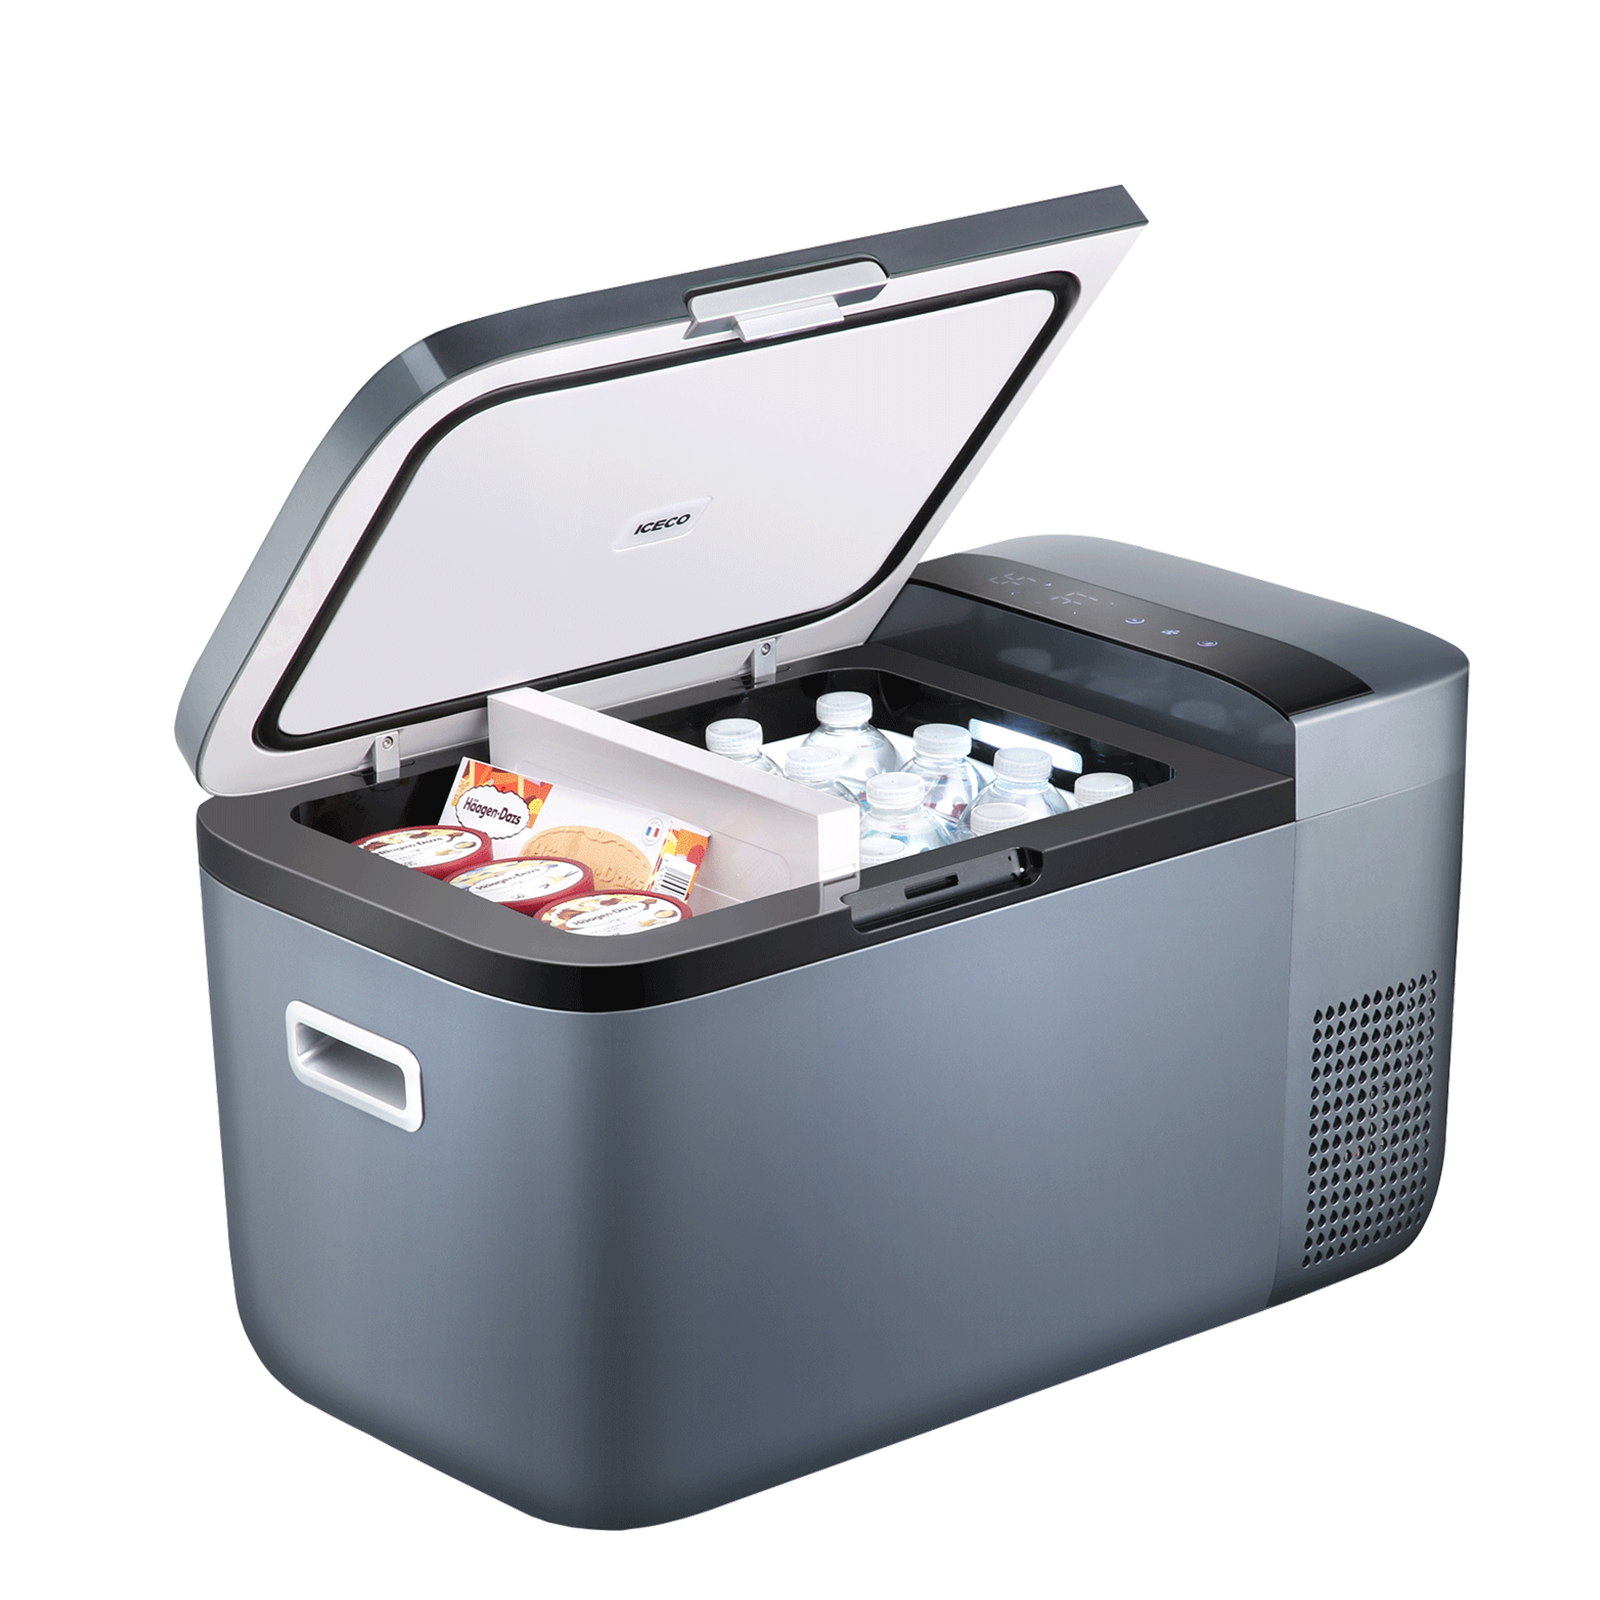 Dometic - Portable Fridge & Freezer Combo, Cooler, Ice maker